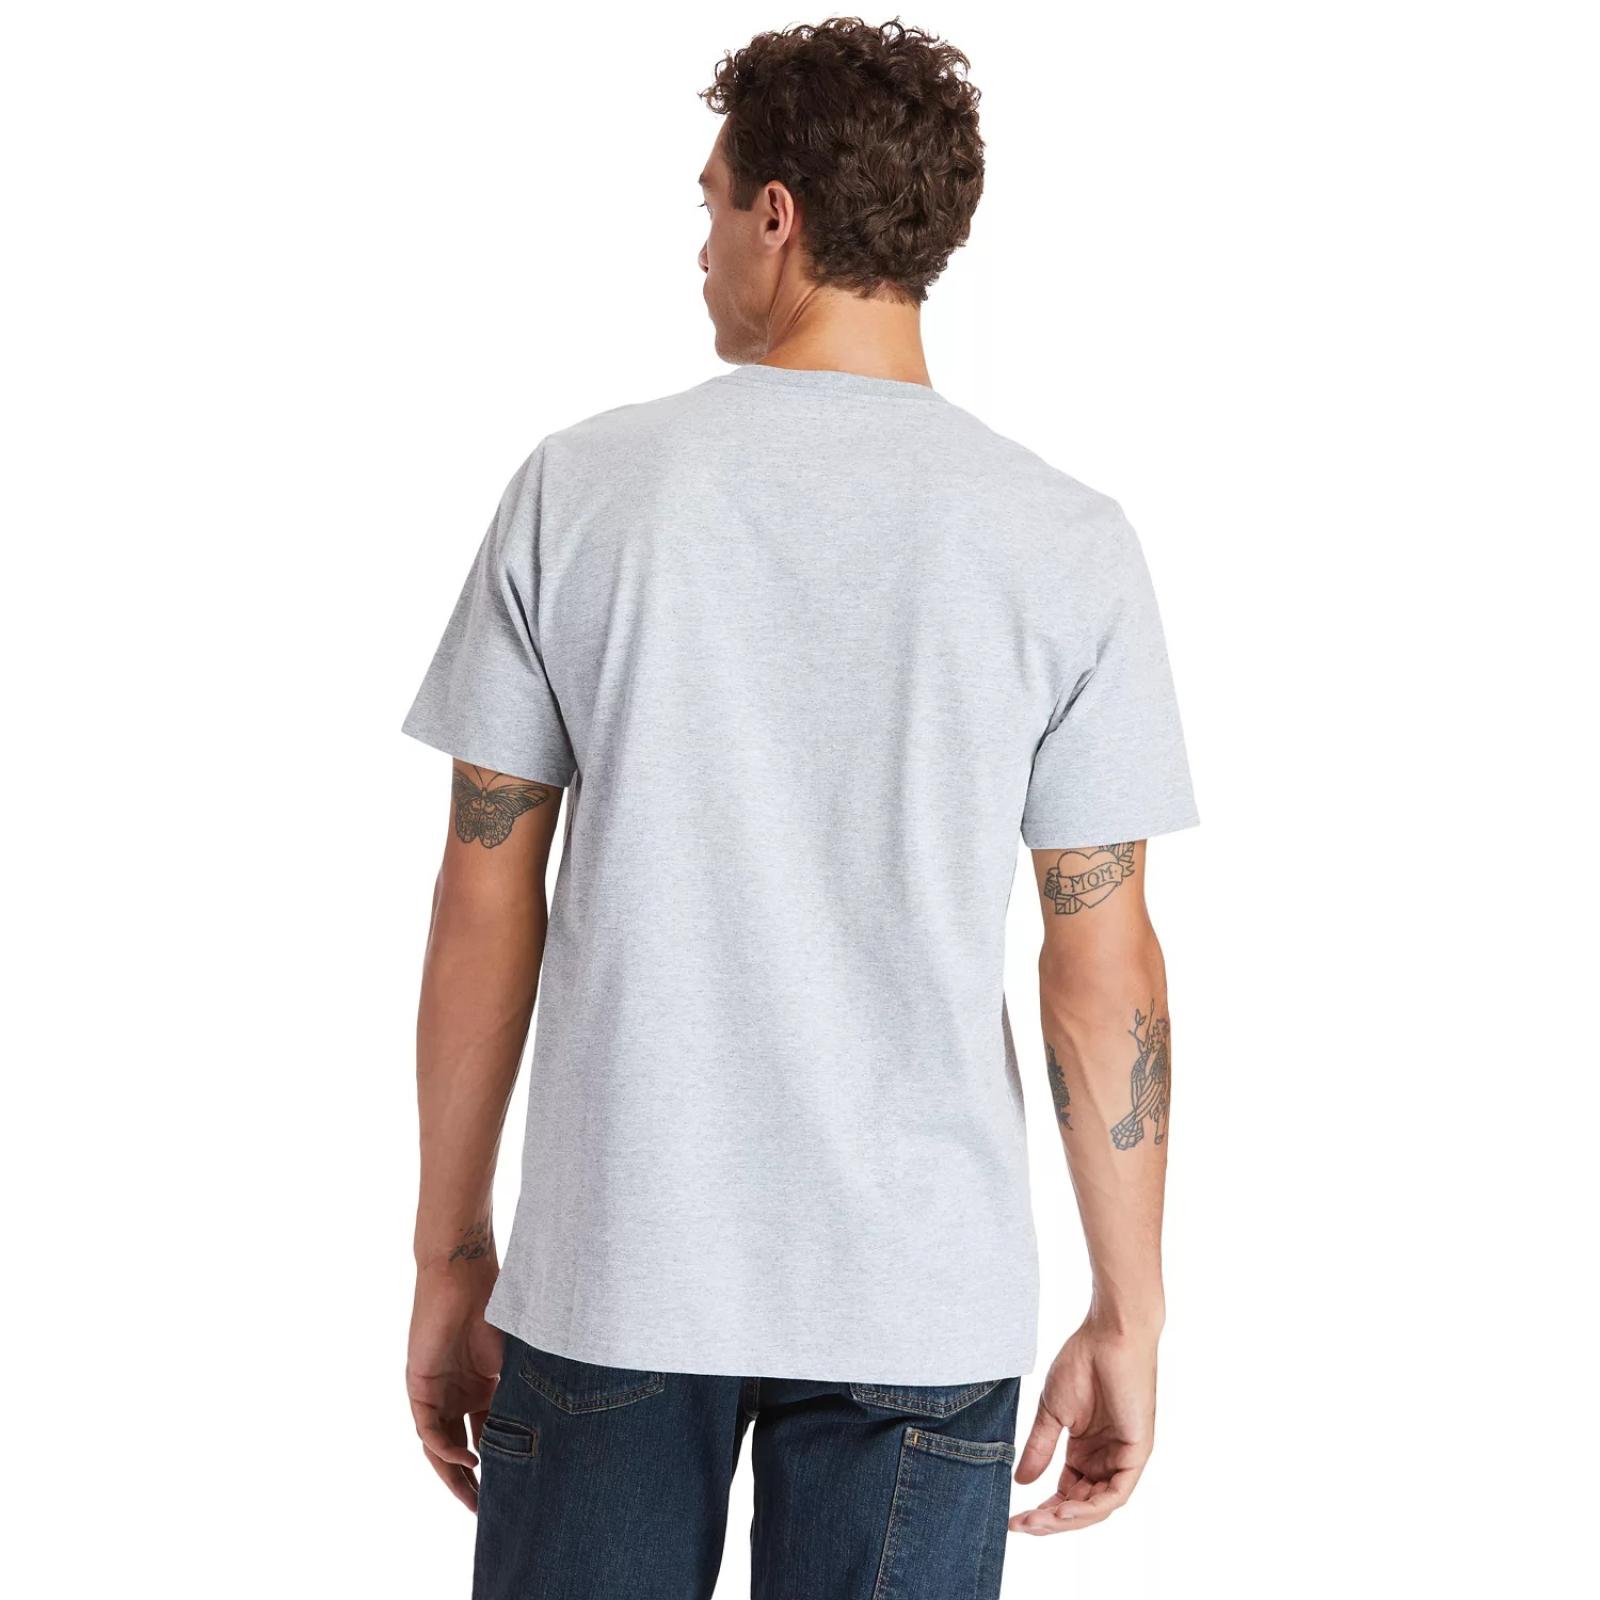 Timberland PRO Men's Base Plate Wicking T-Shirt